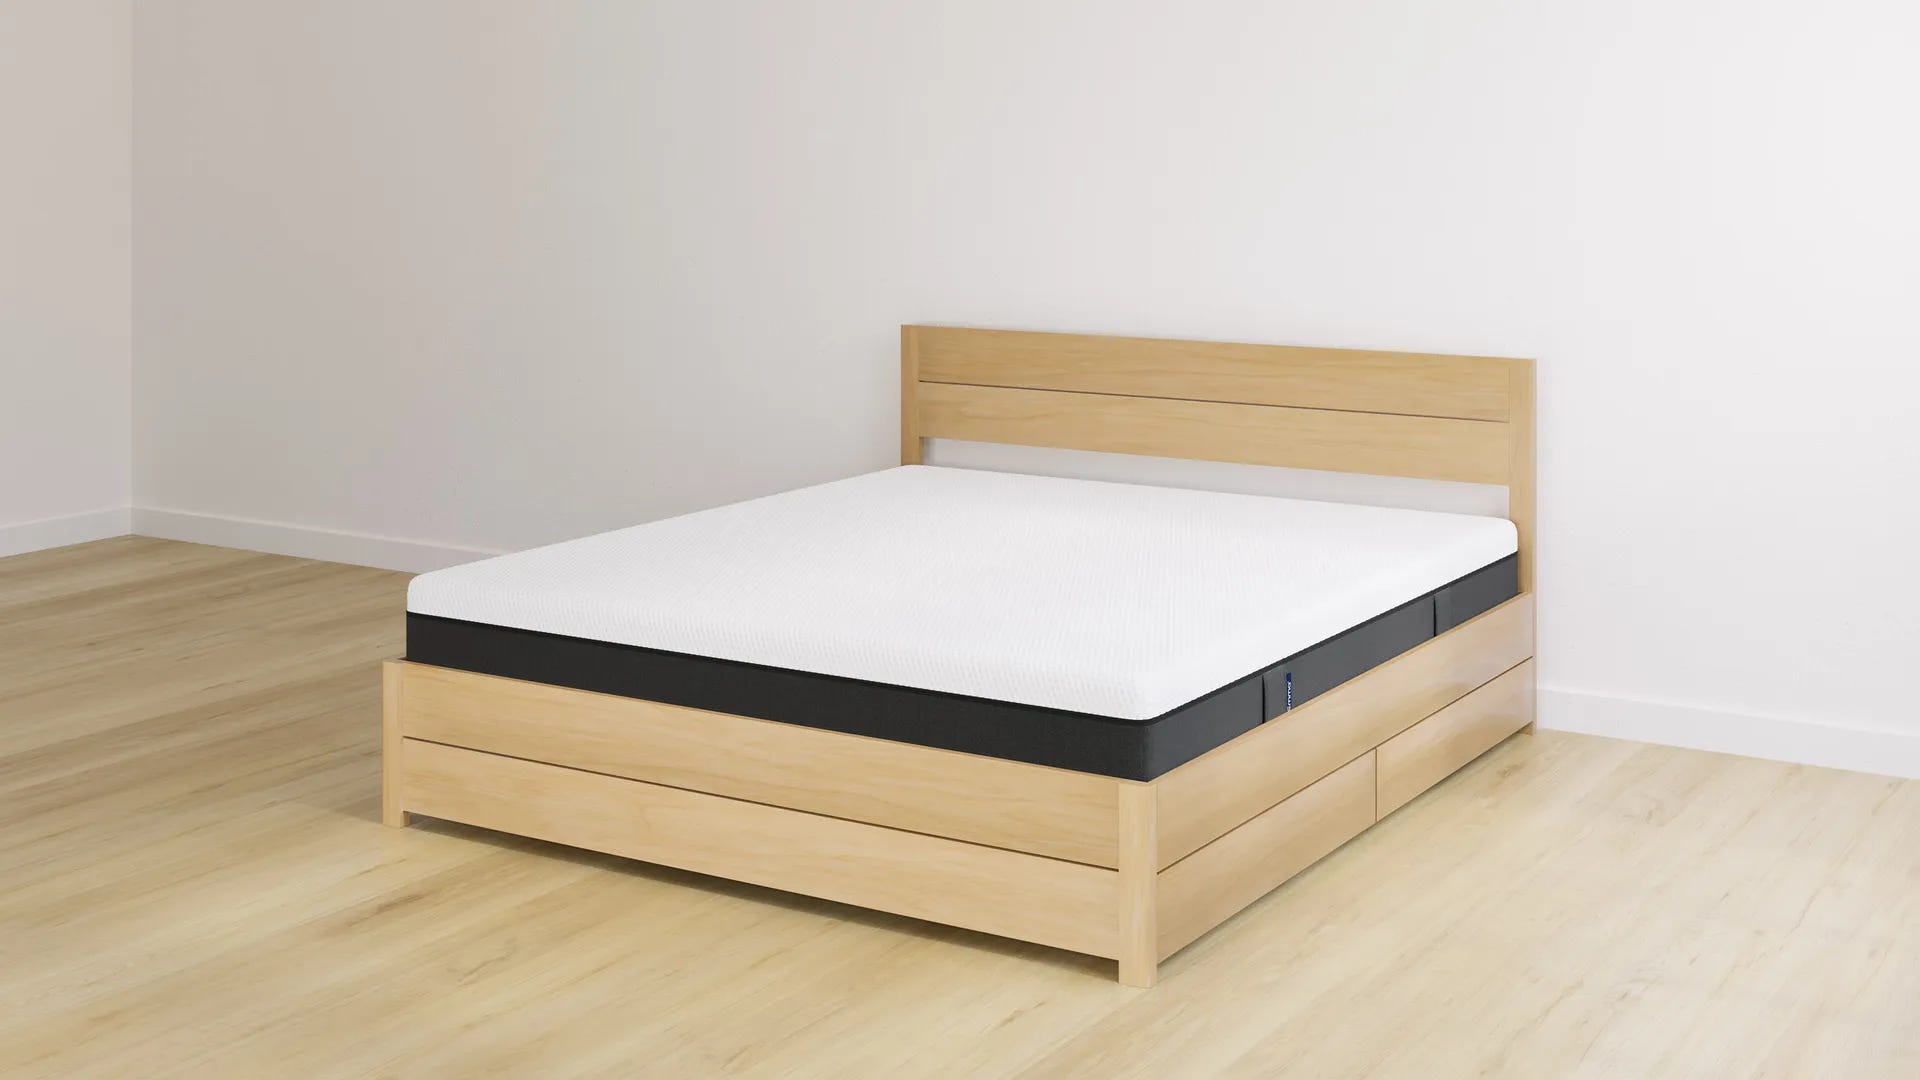 Wooden_bed_double_headboard_mattress_storage.webp